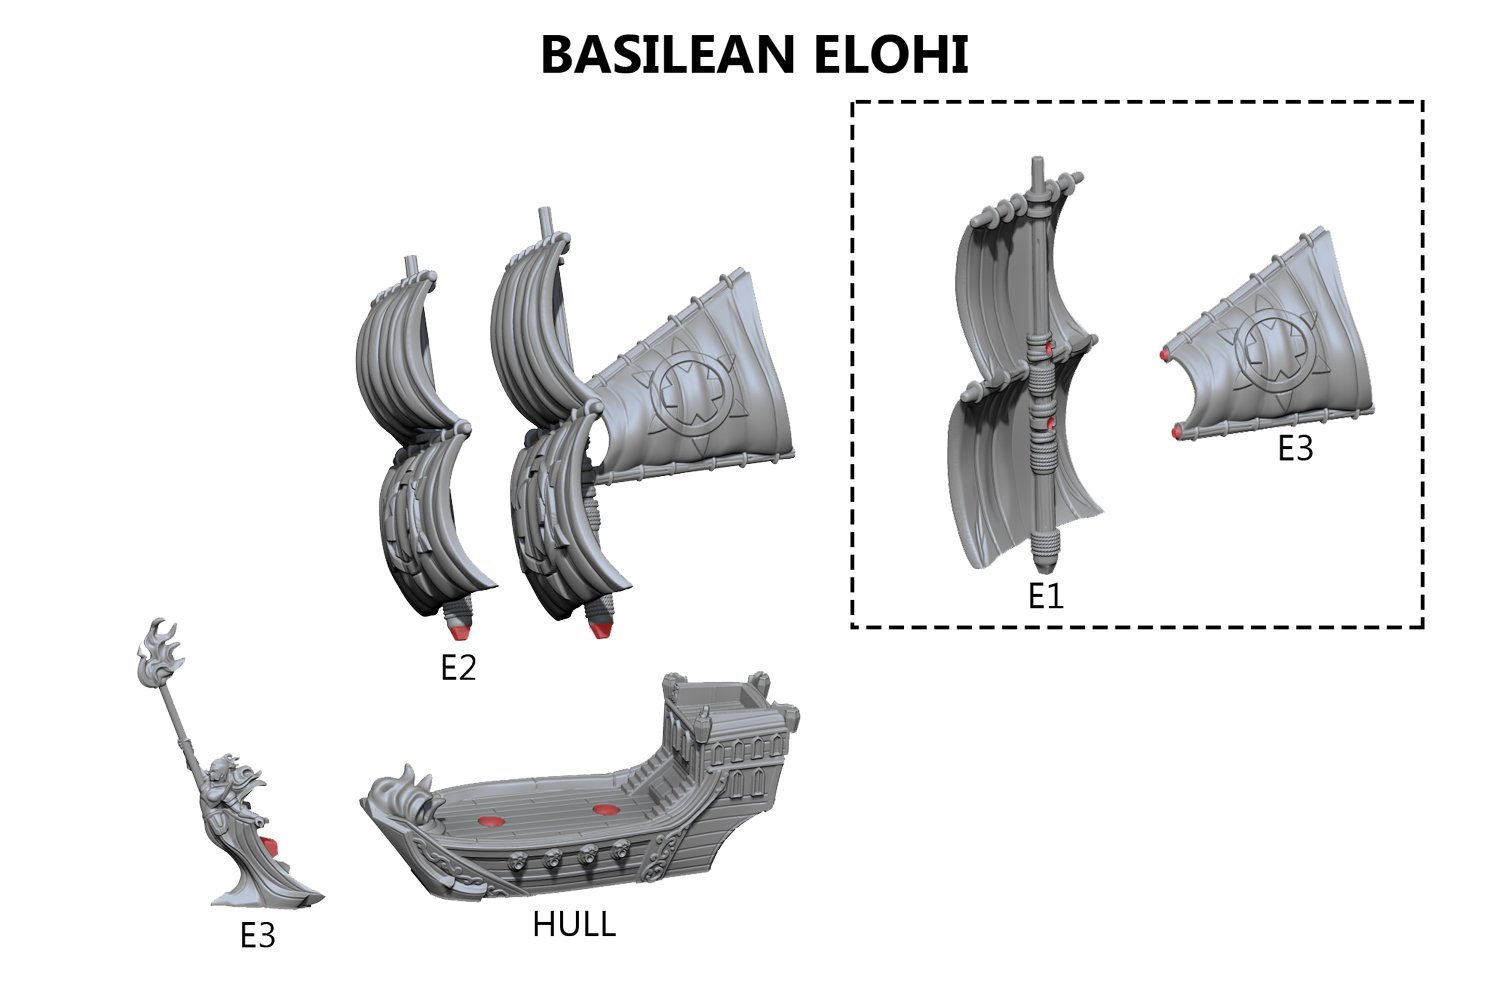 Basilean Elohi Assembly Instructions